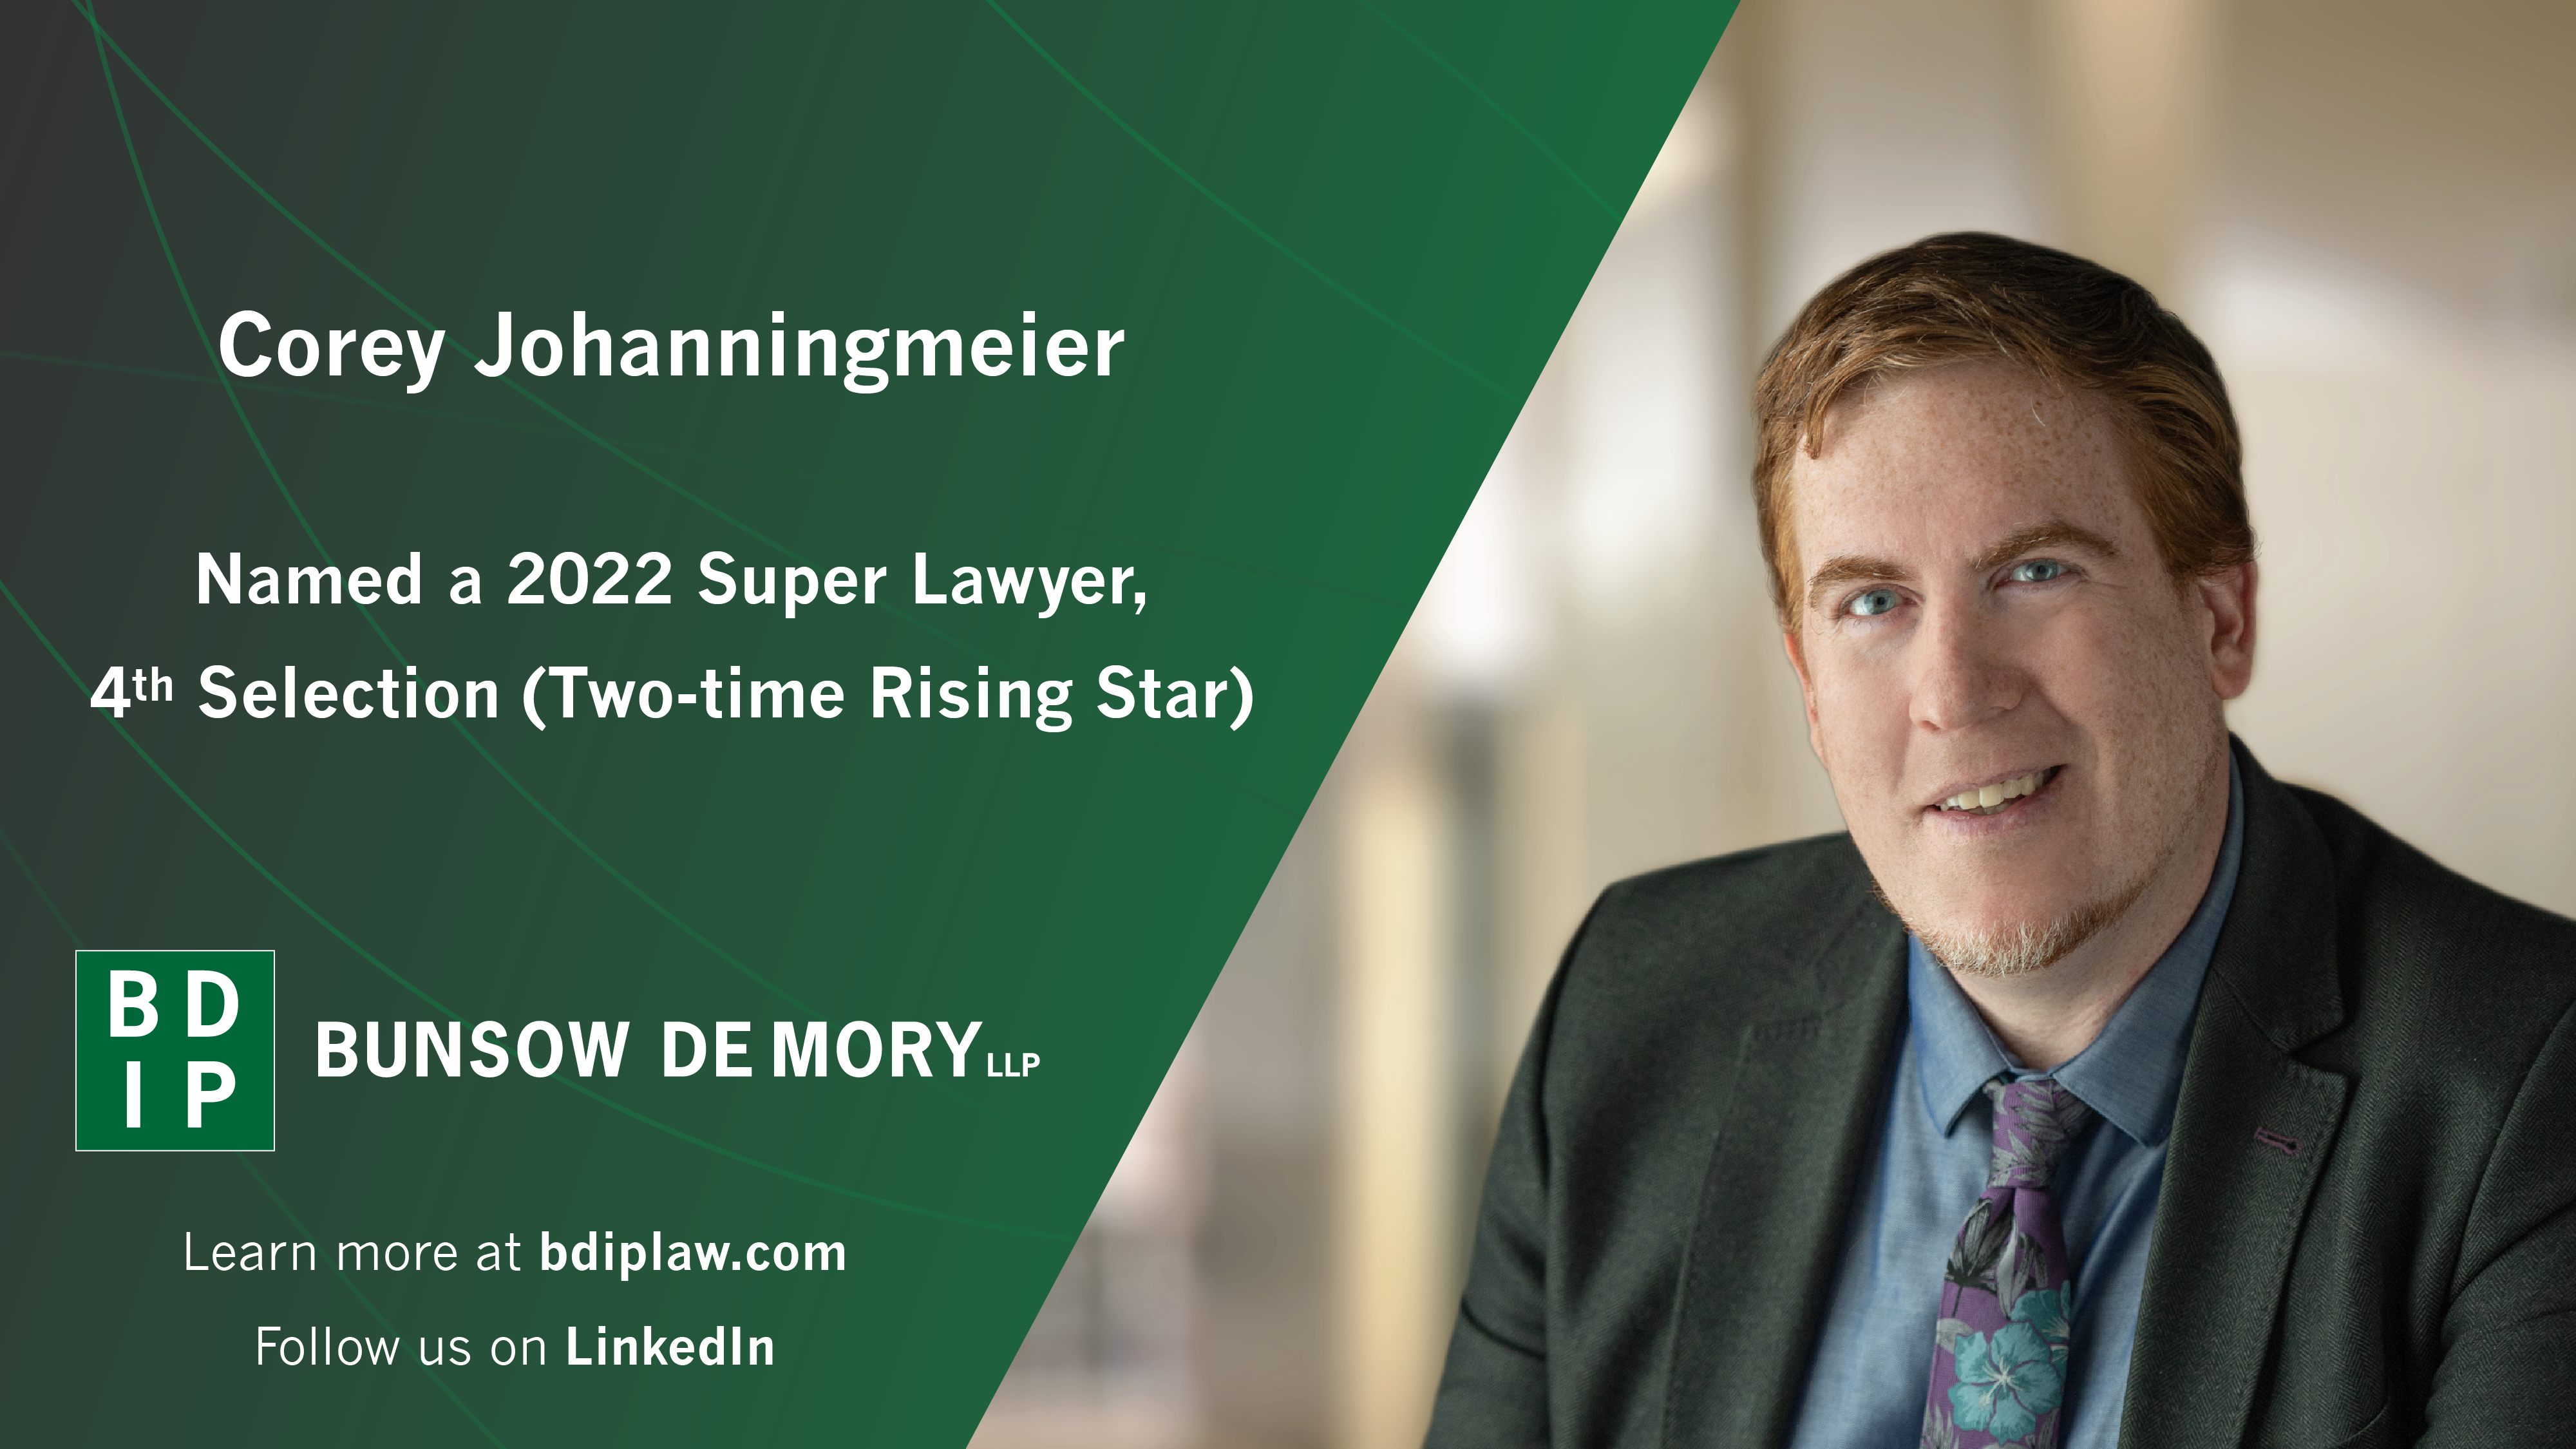 Corey Johanningmeier Named a 2022 Northern California Super Lawyer